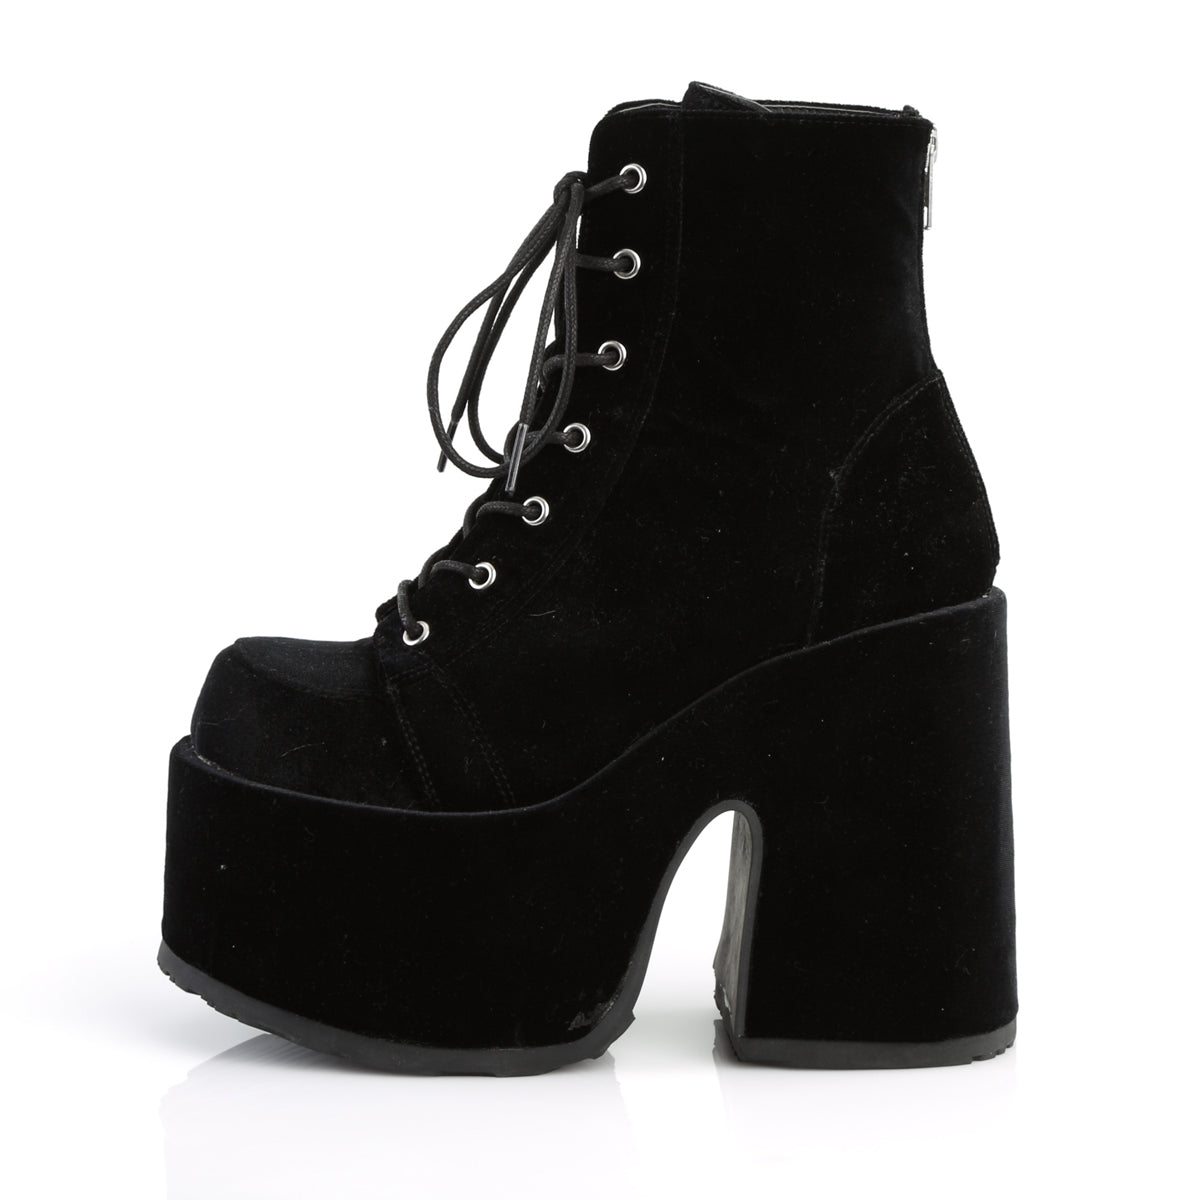 Demonia Platform Boots - Camel203 Black Velvet